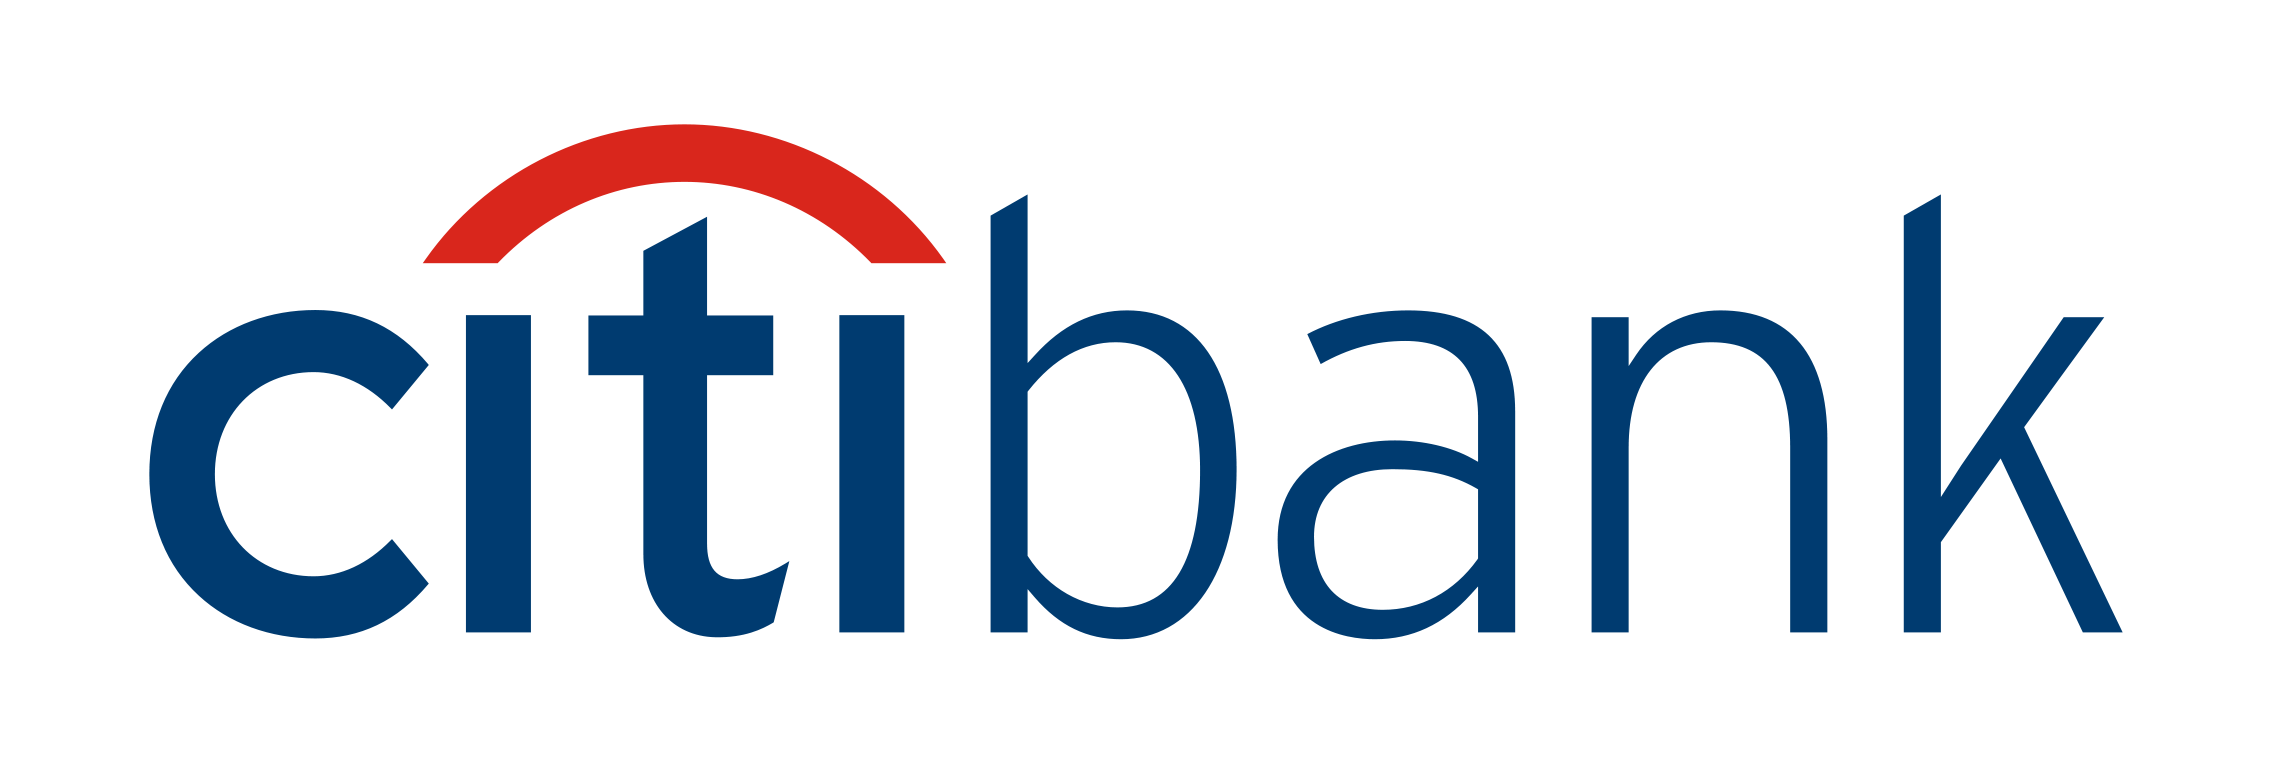 citi-bank-logo